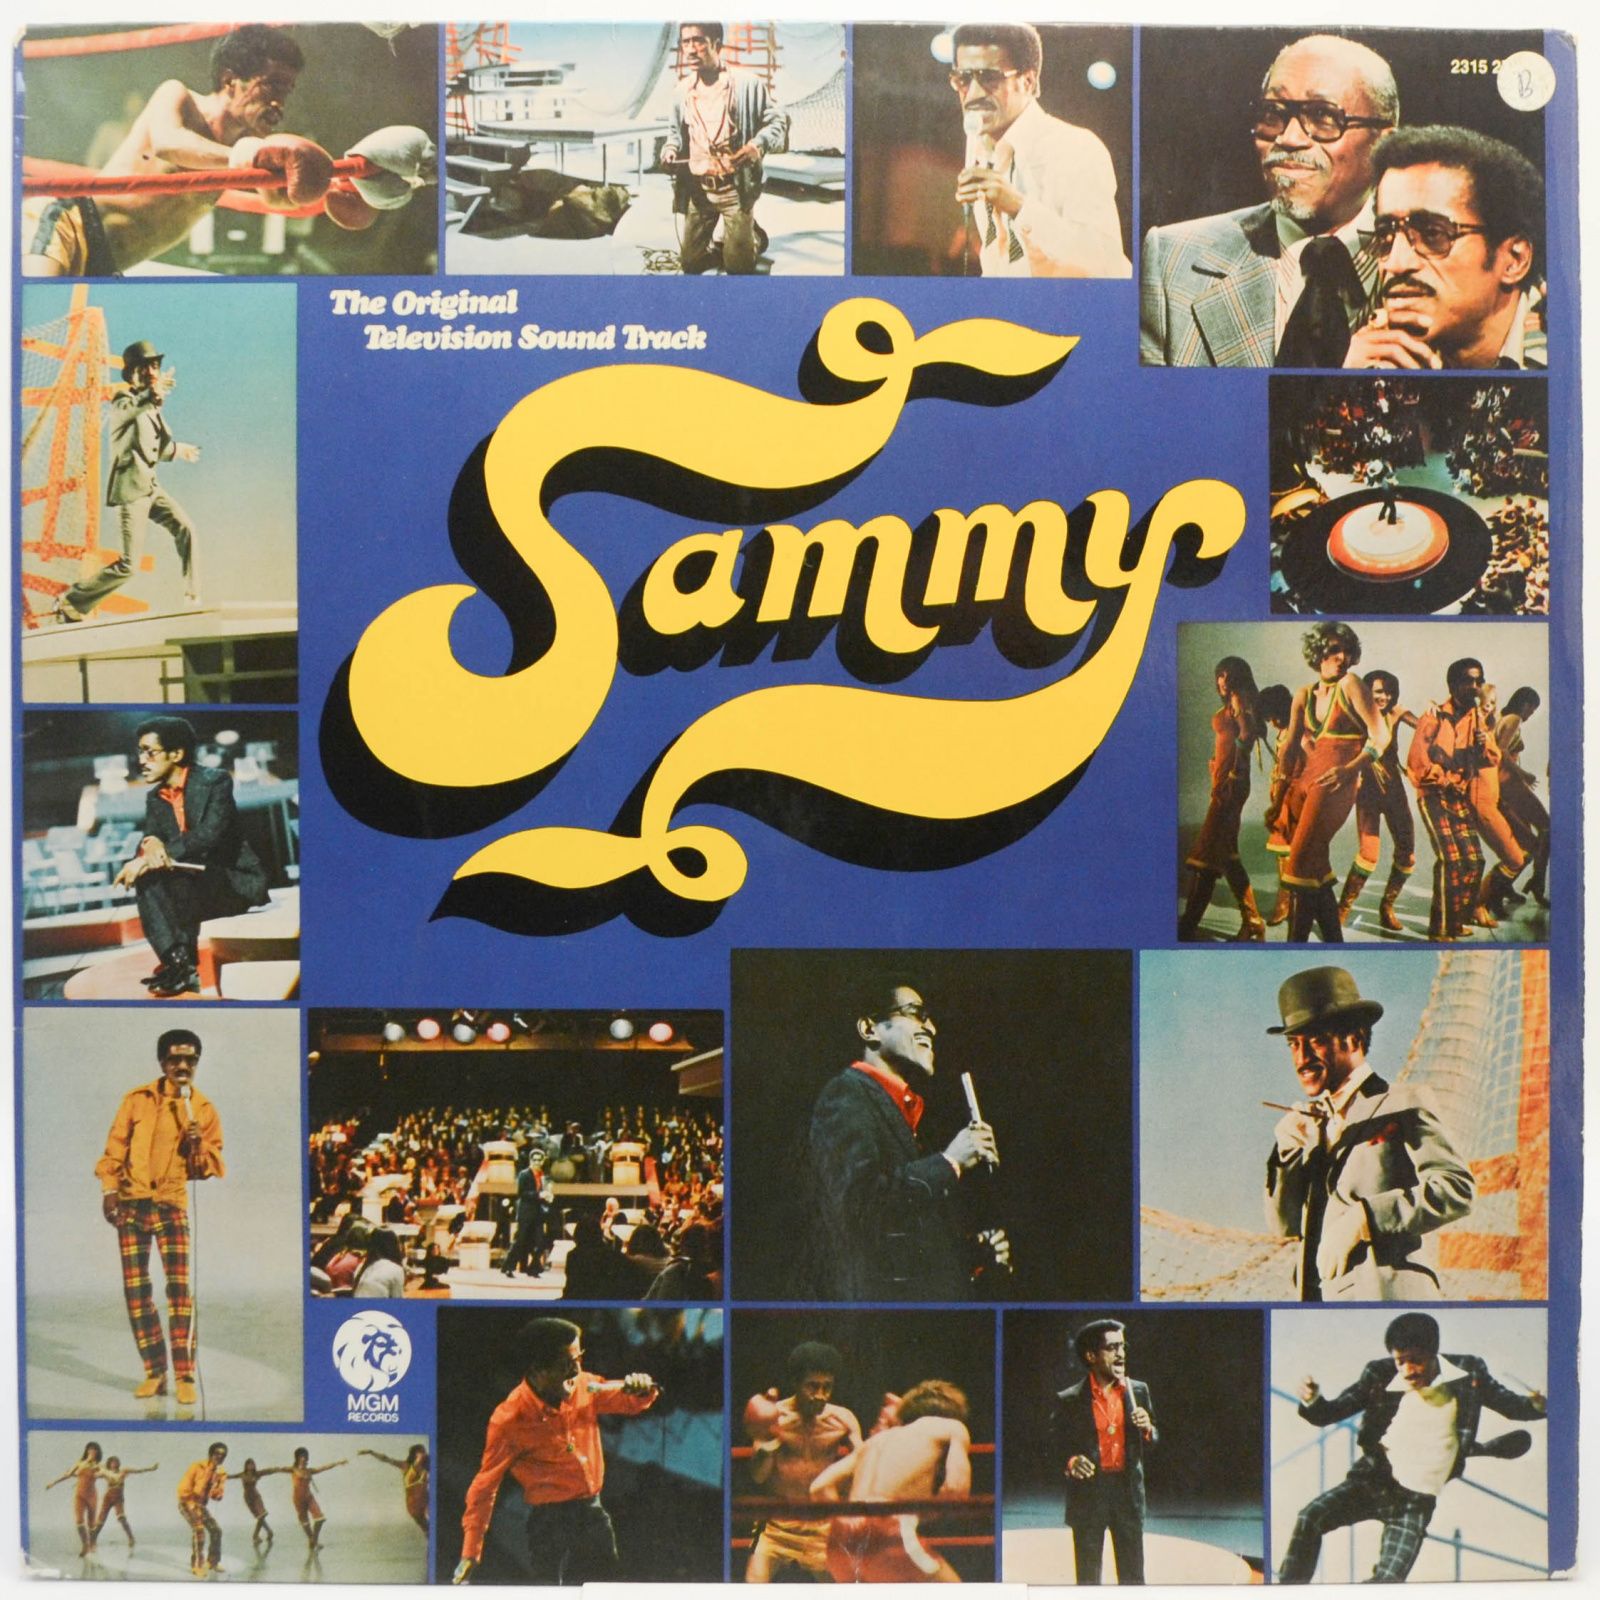 Sammy Davis, Jr. — The Original Television Sound Track "Sammy", 1973